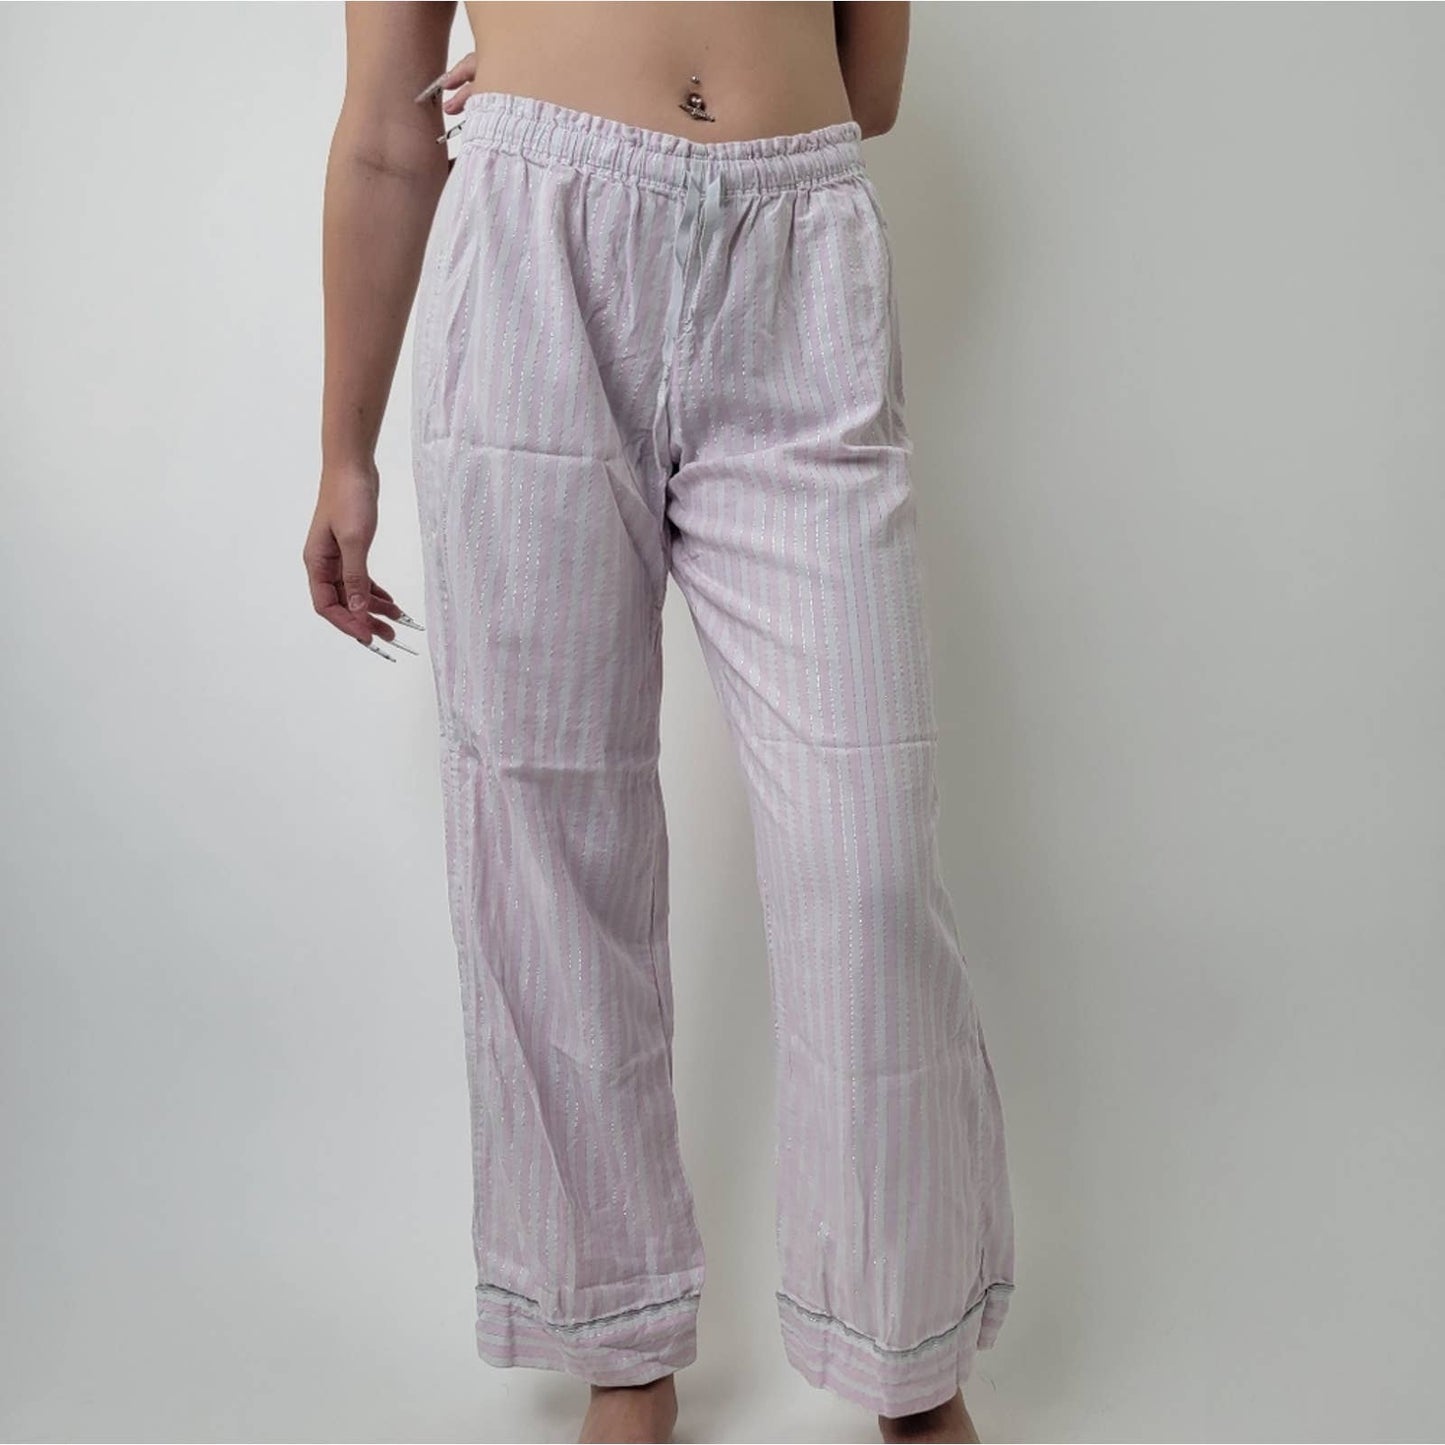 Victoria's Secret Blush Pink Striped Sleep Pants - M